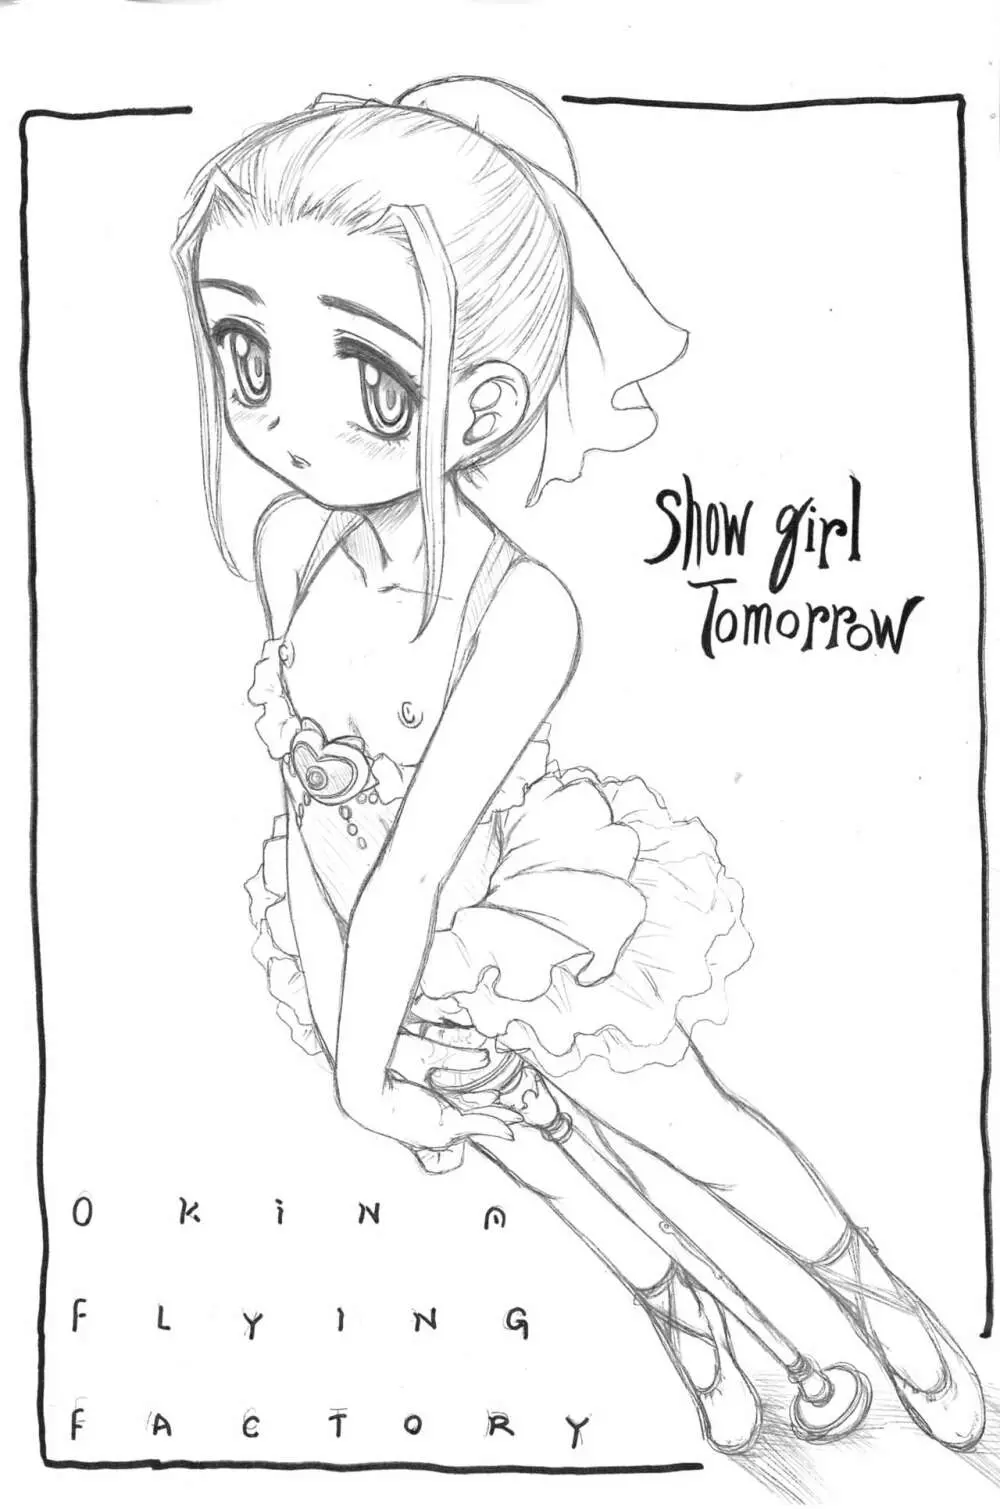 Show girl Tomorrow - page1